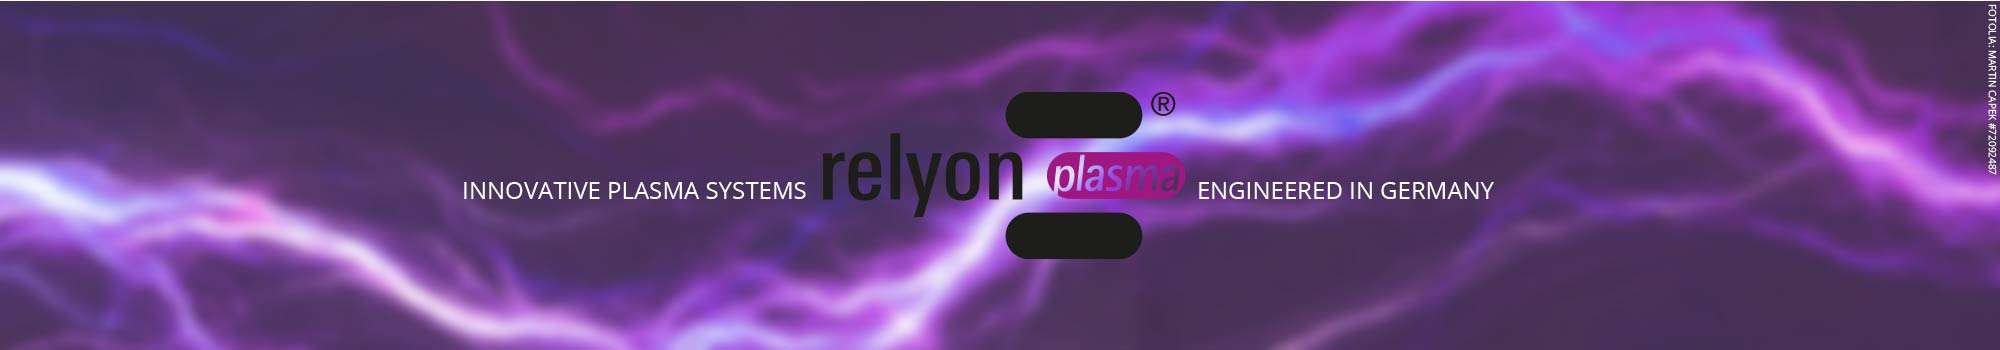 Relyon Plasma Contact